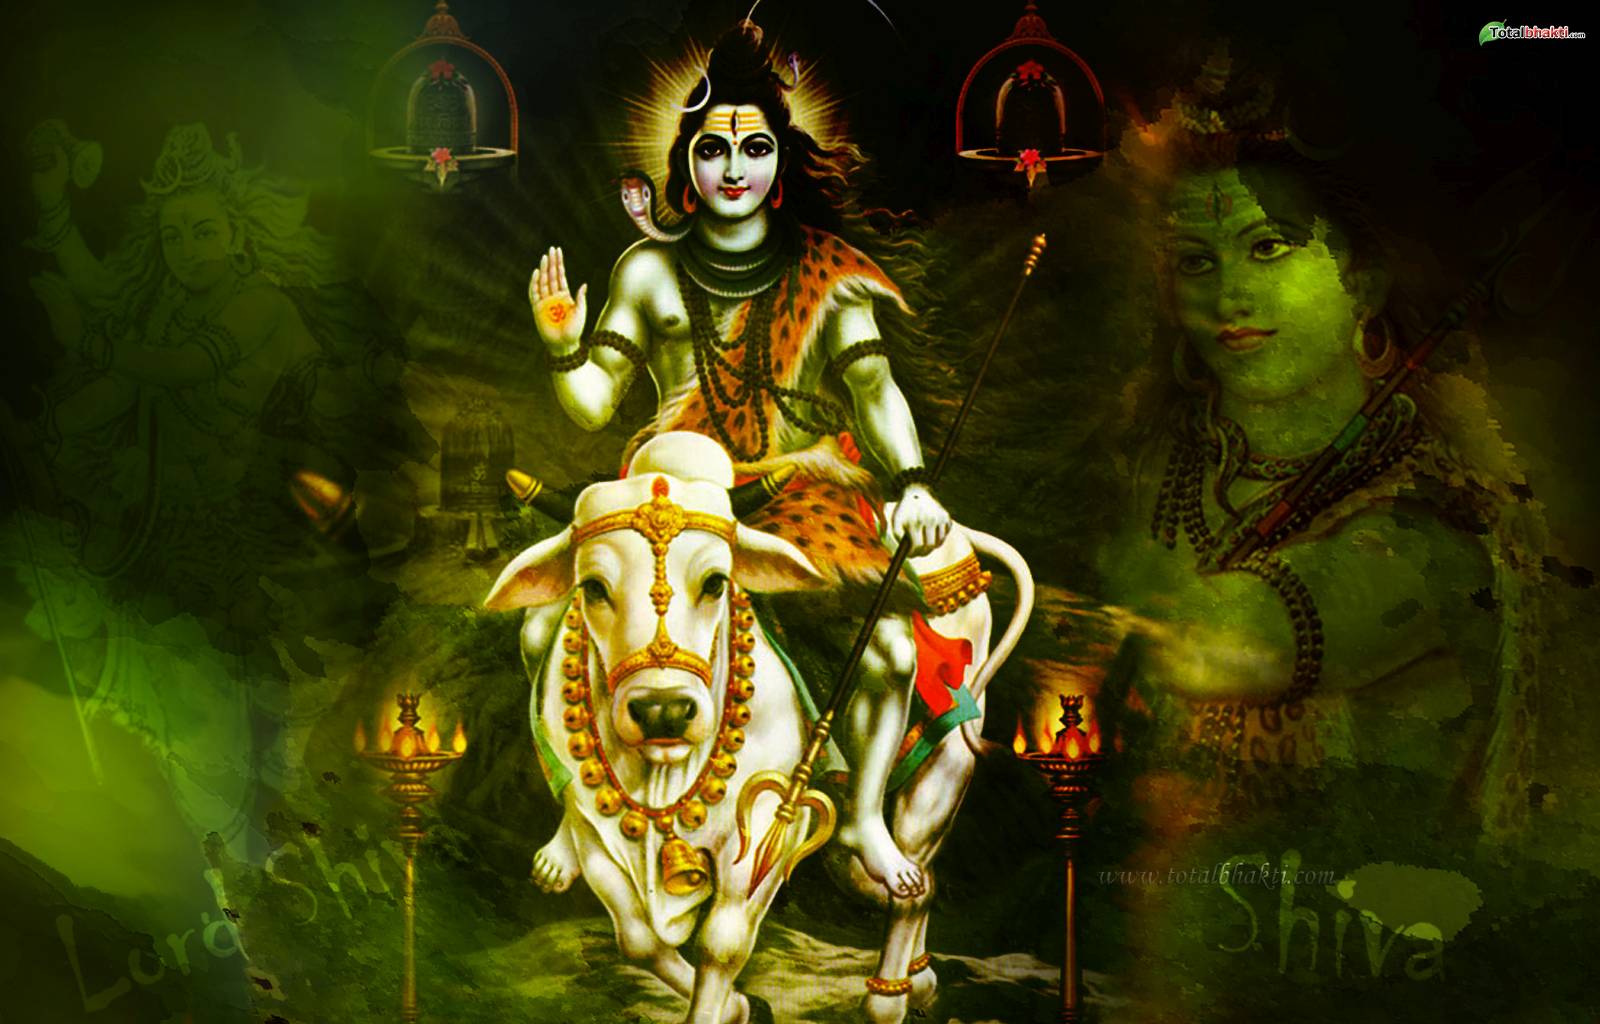 Wallpapers » Hindu God Shiva Wallpaper » Free Shiva - Lord Shiva With Nandi - HD Wallpaper 